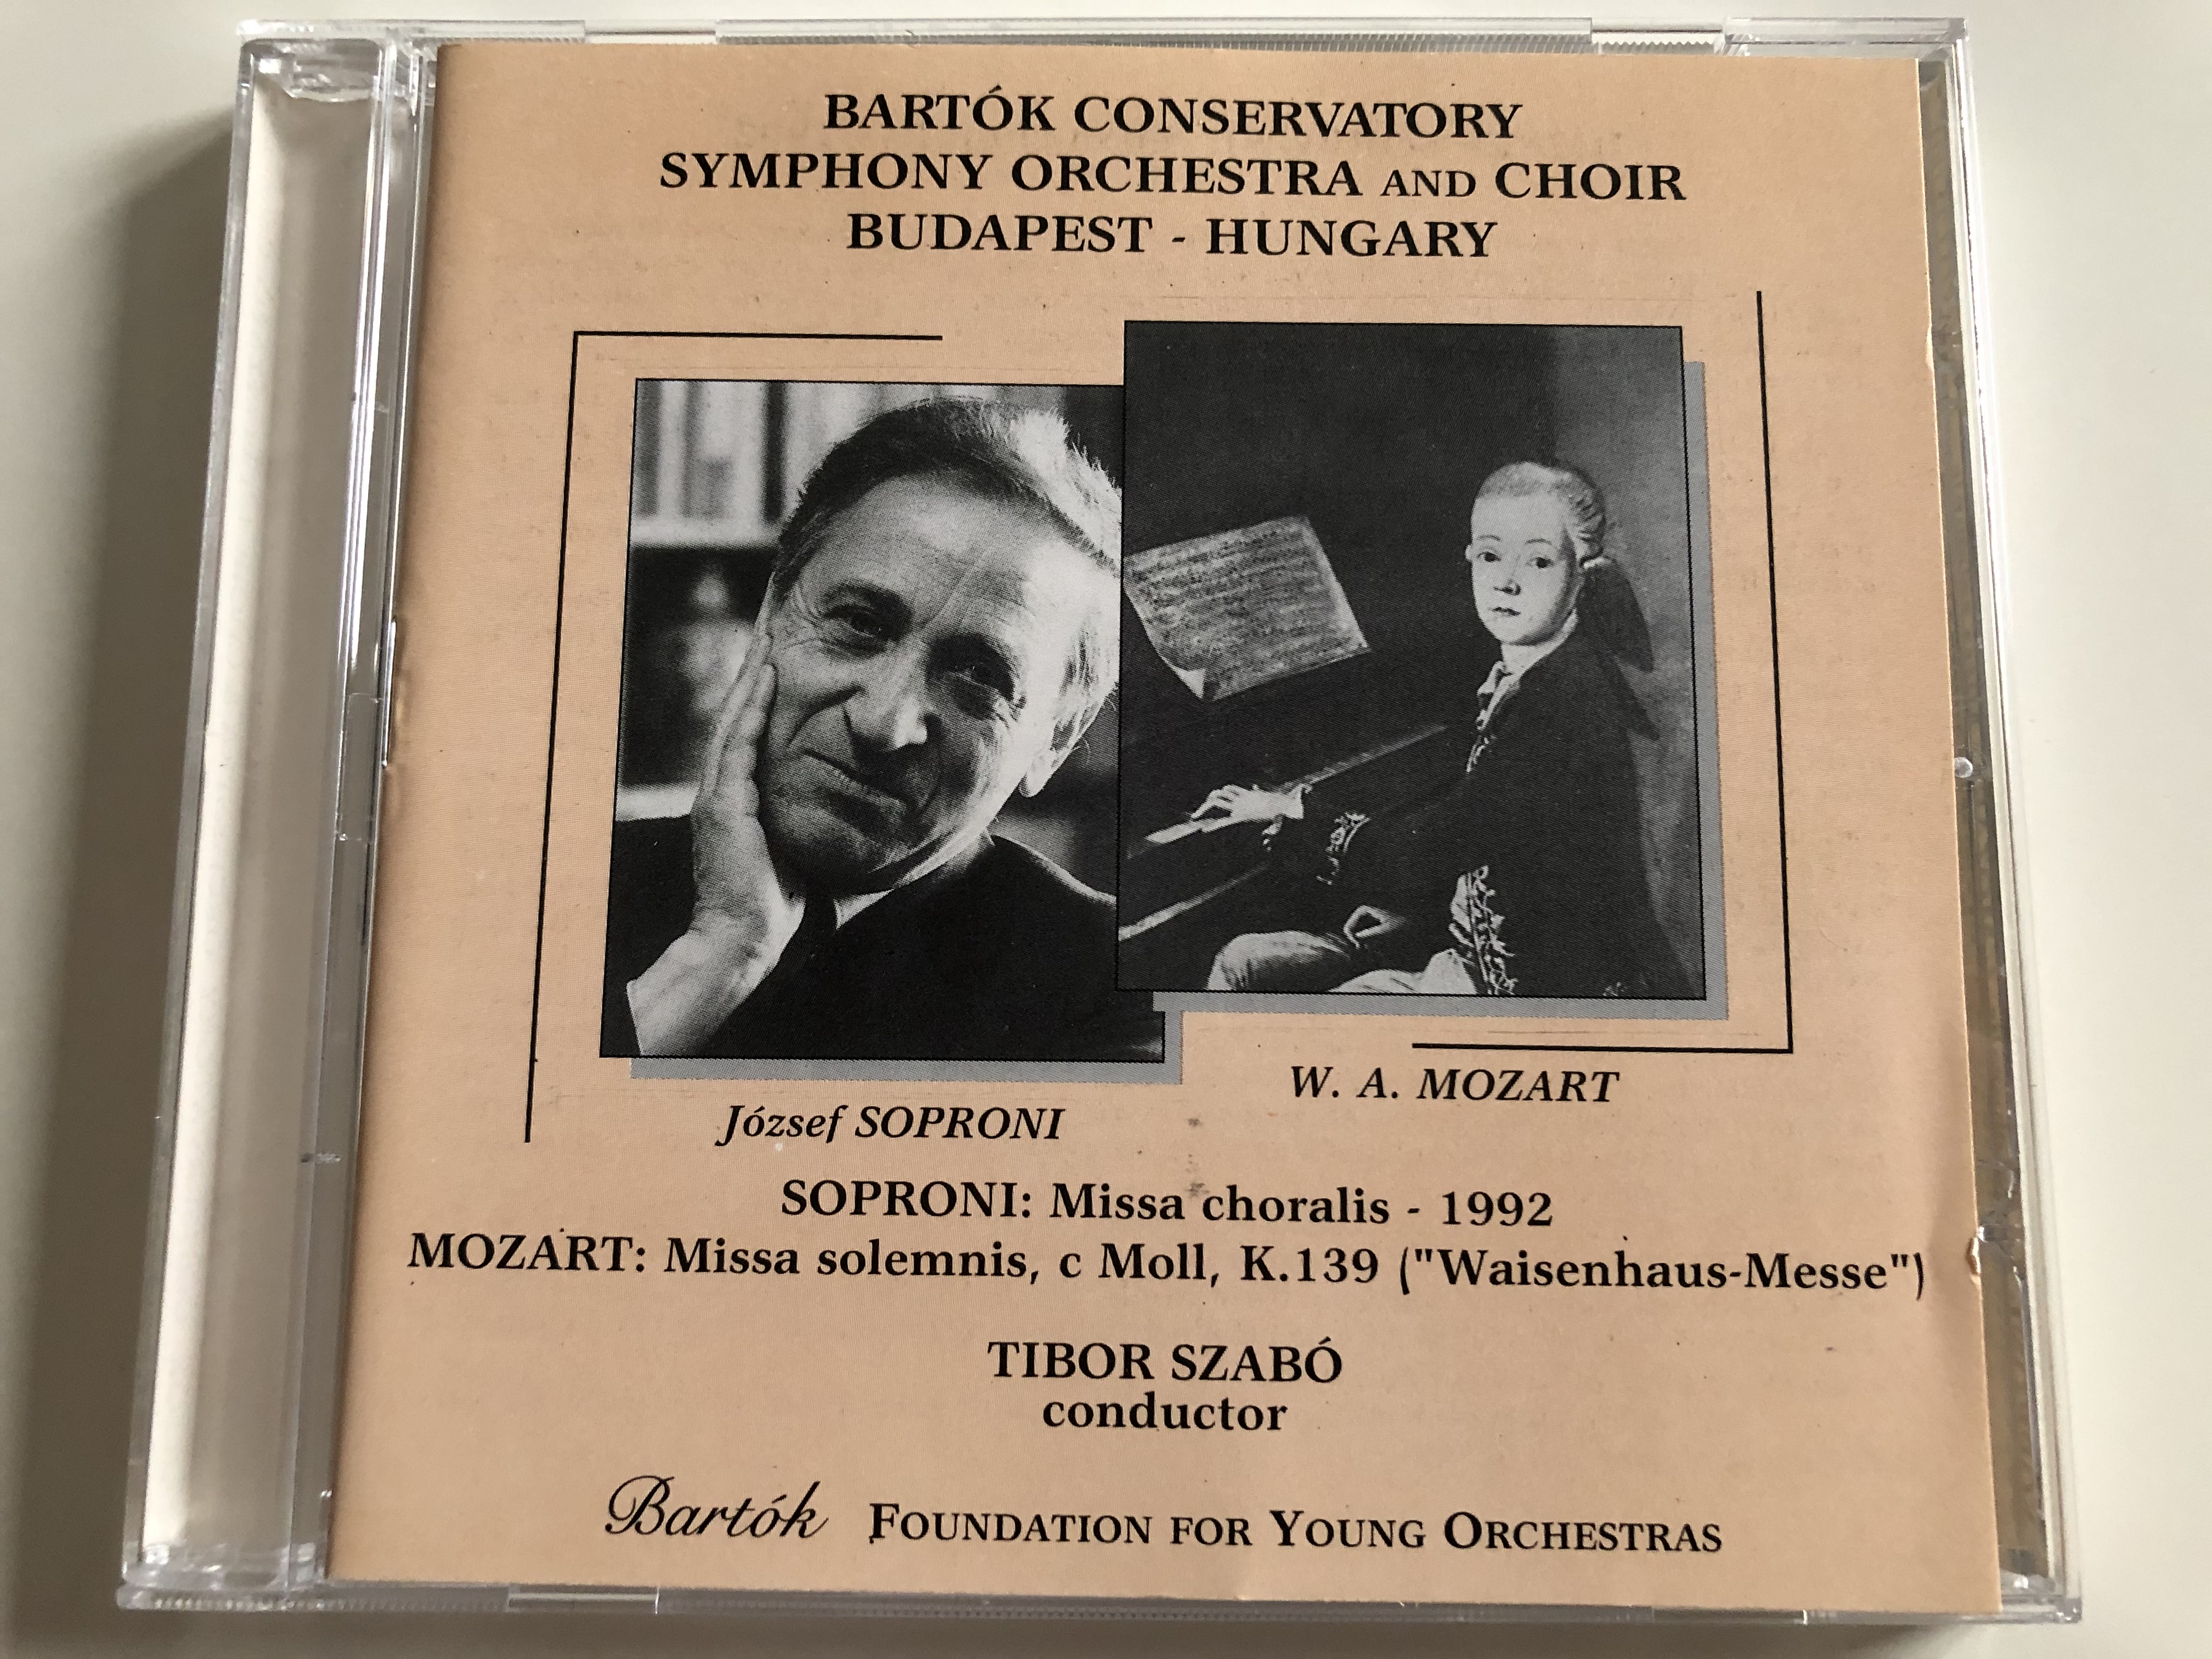 bartok-conservatory-symphonie-orchestra-and-choir-budapest-hungary-jozsef-soproni-missa-choralis-1992-mozart-missa-solemnis-c-moll-k.-139-waisenhaus-messe-conductor-tibor-szabo-ba-1-.jpg